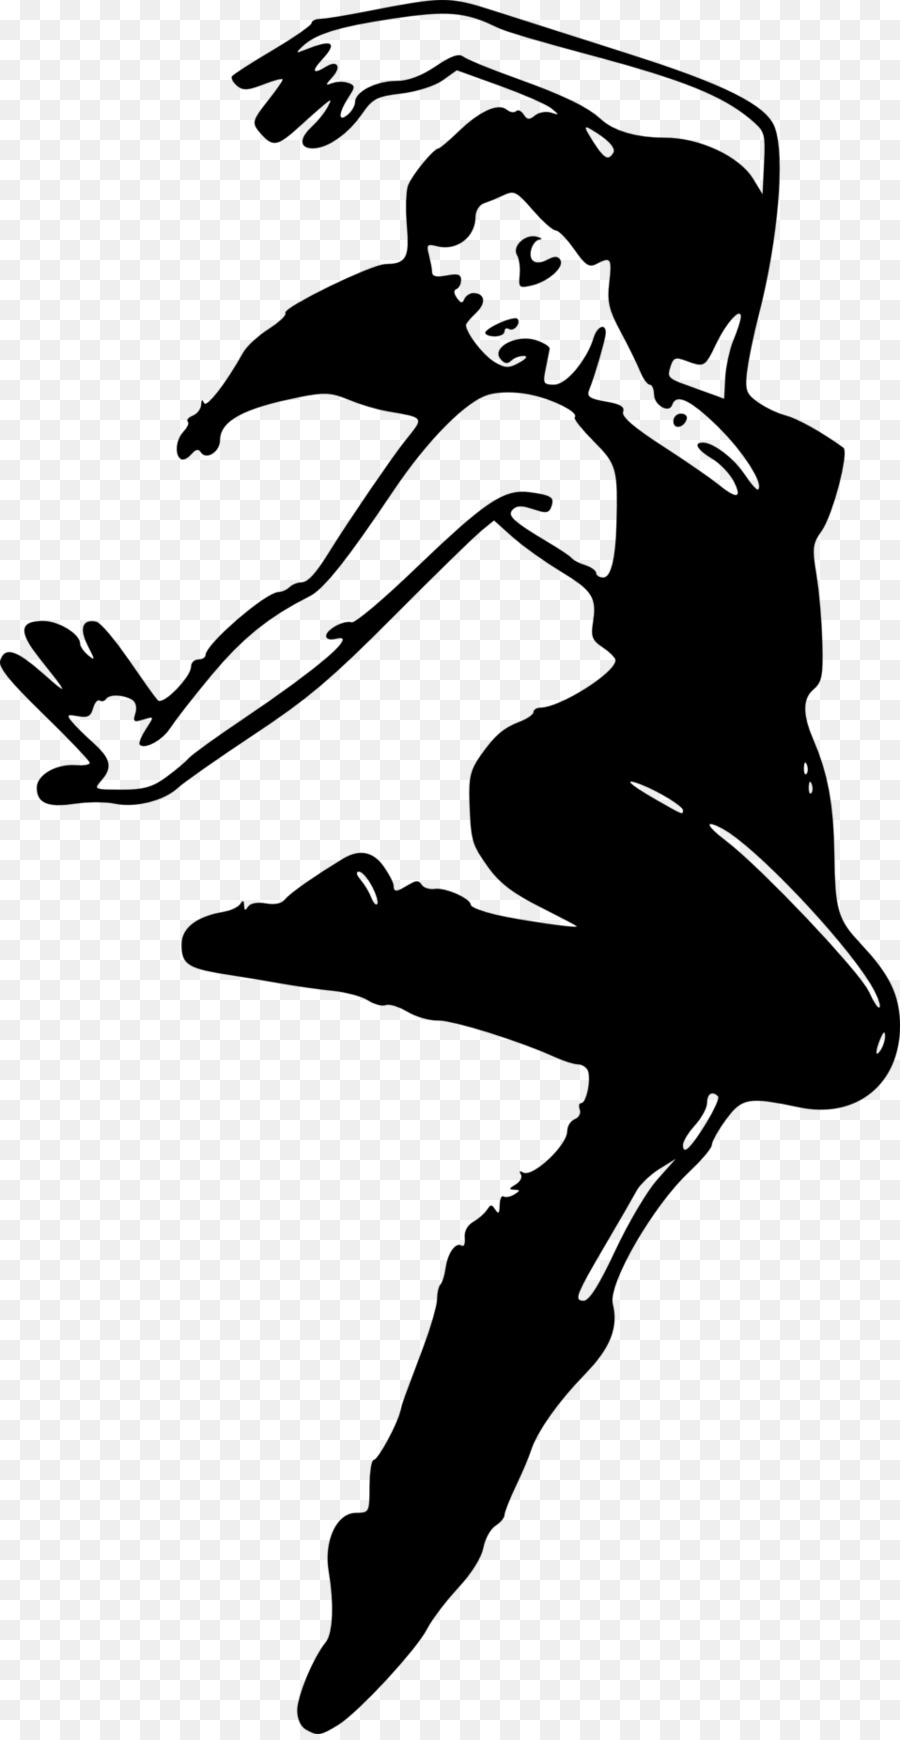 Modern dance Clip art - Silhouette png download - 958*1846 - Free Transparent Dance png Download.